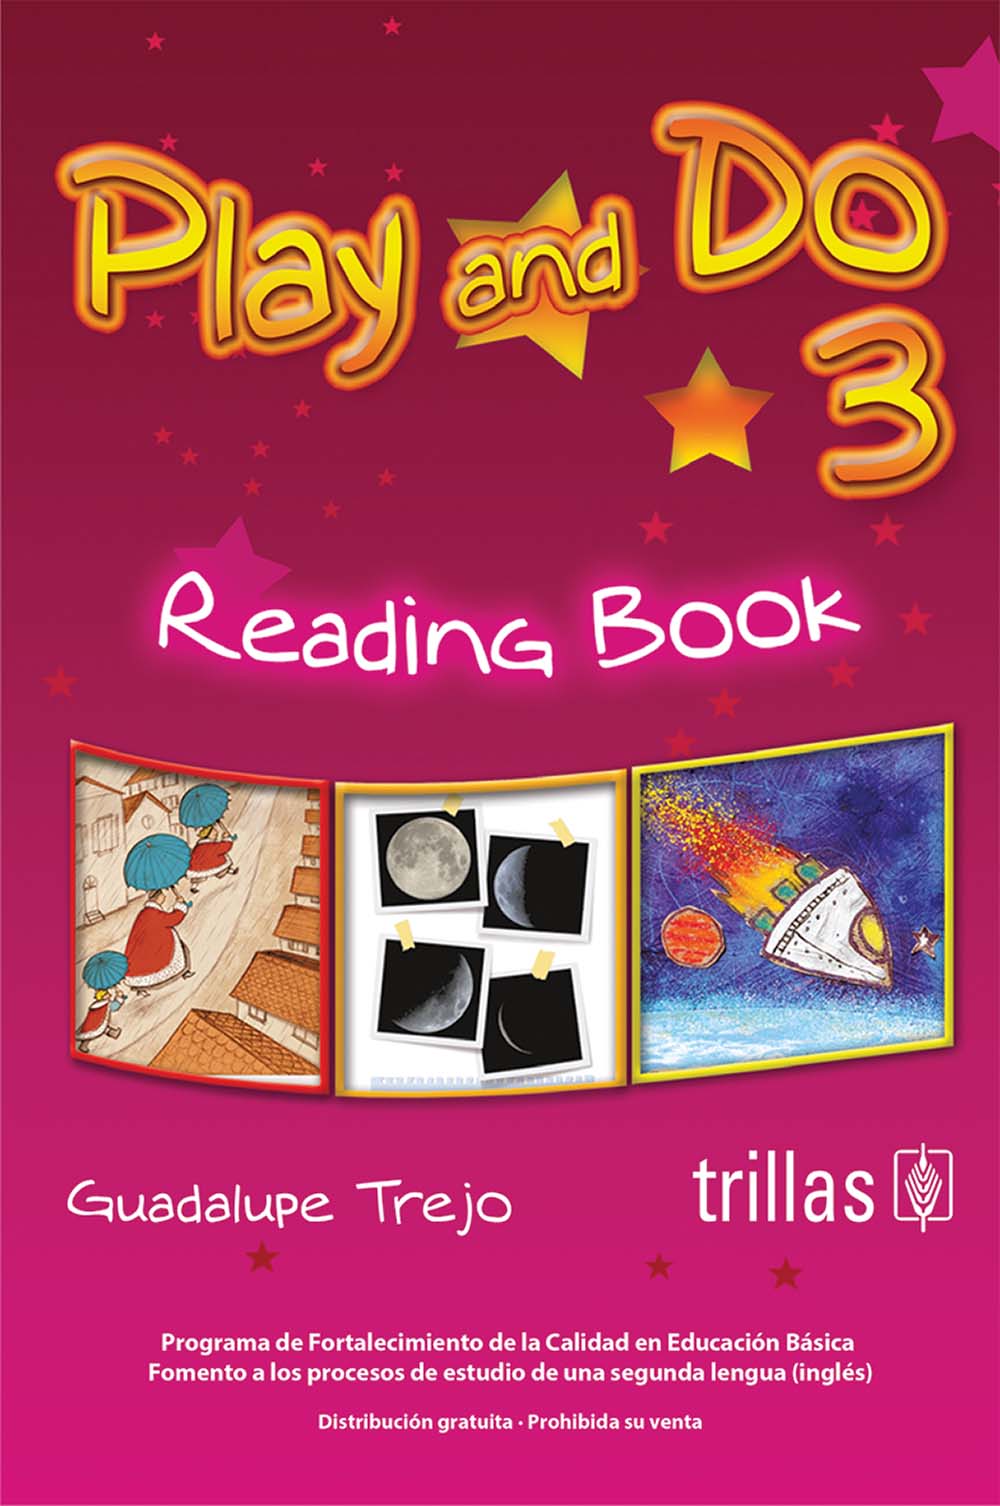 Play and Do 3 Libro de Lectura, Editorial: Trillas, Nivel: Primaria, Grado: 3